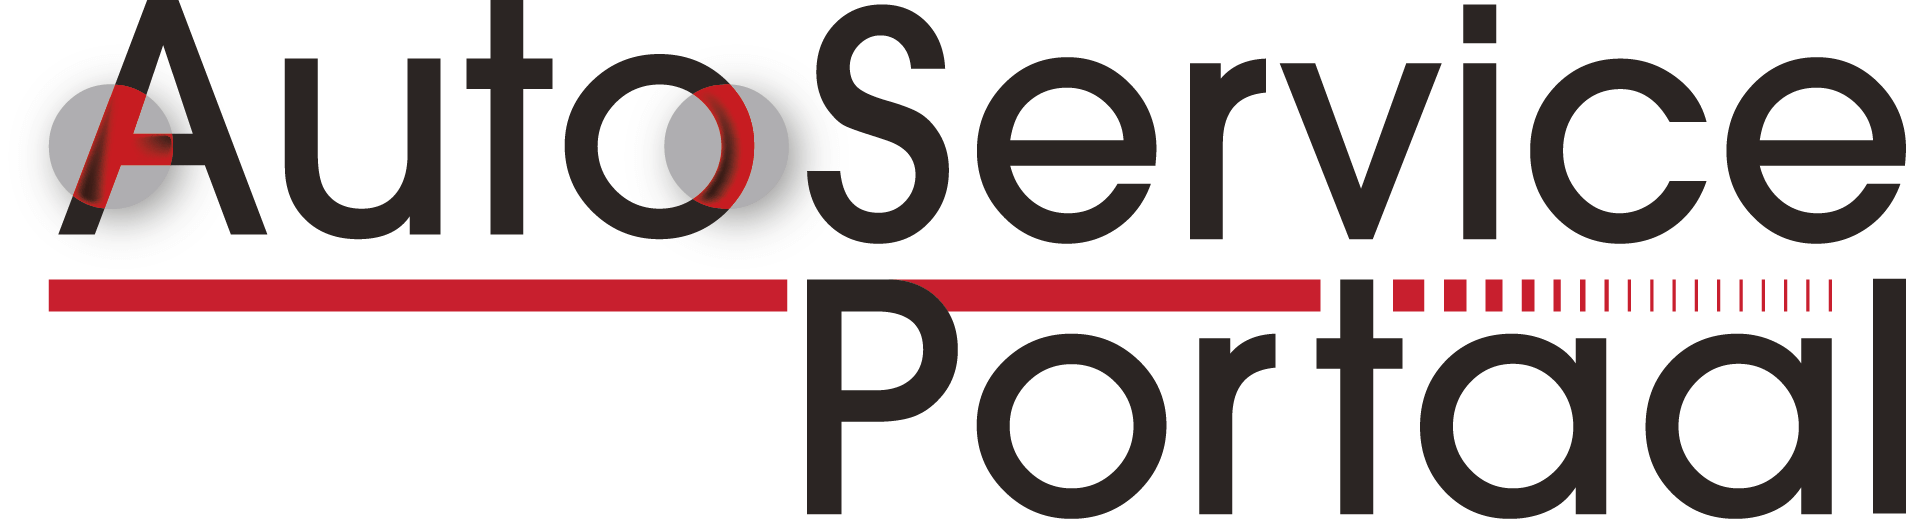 Auto Service Portaal Logo